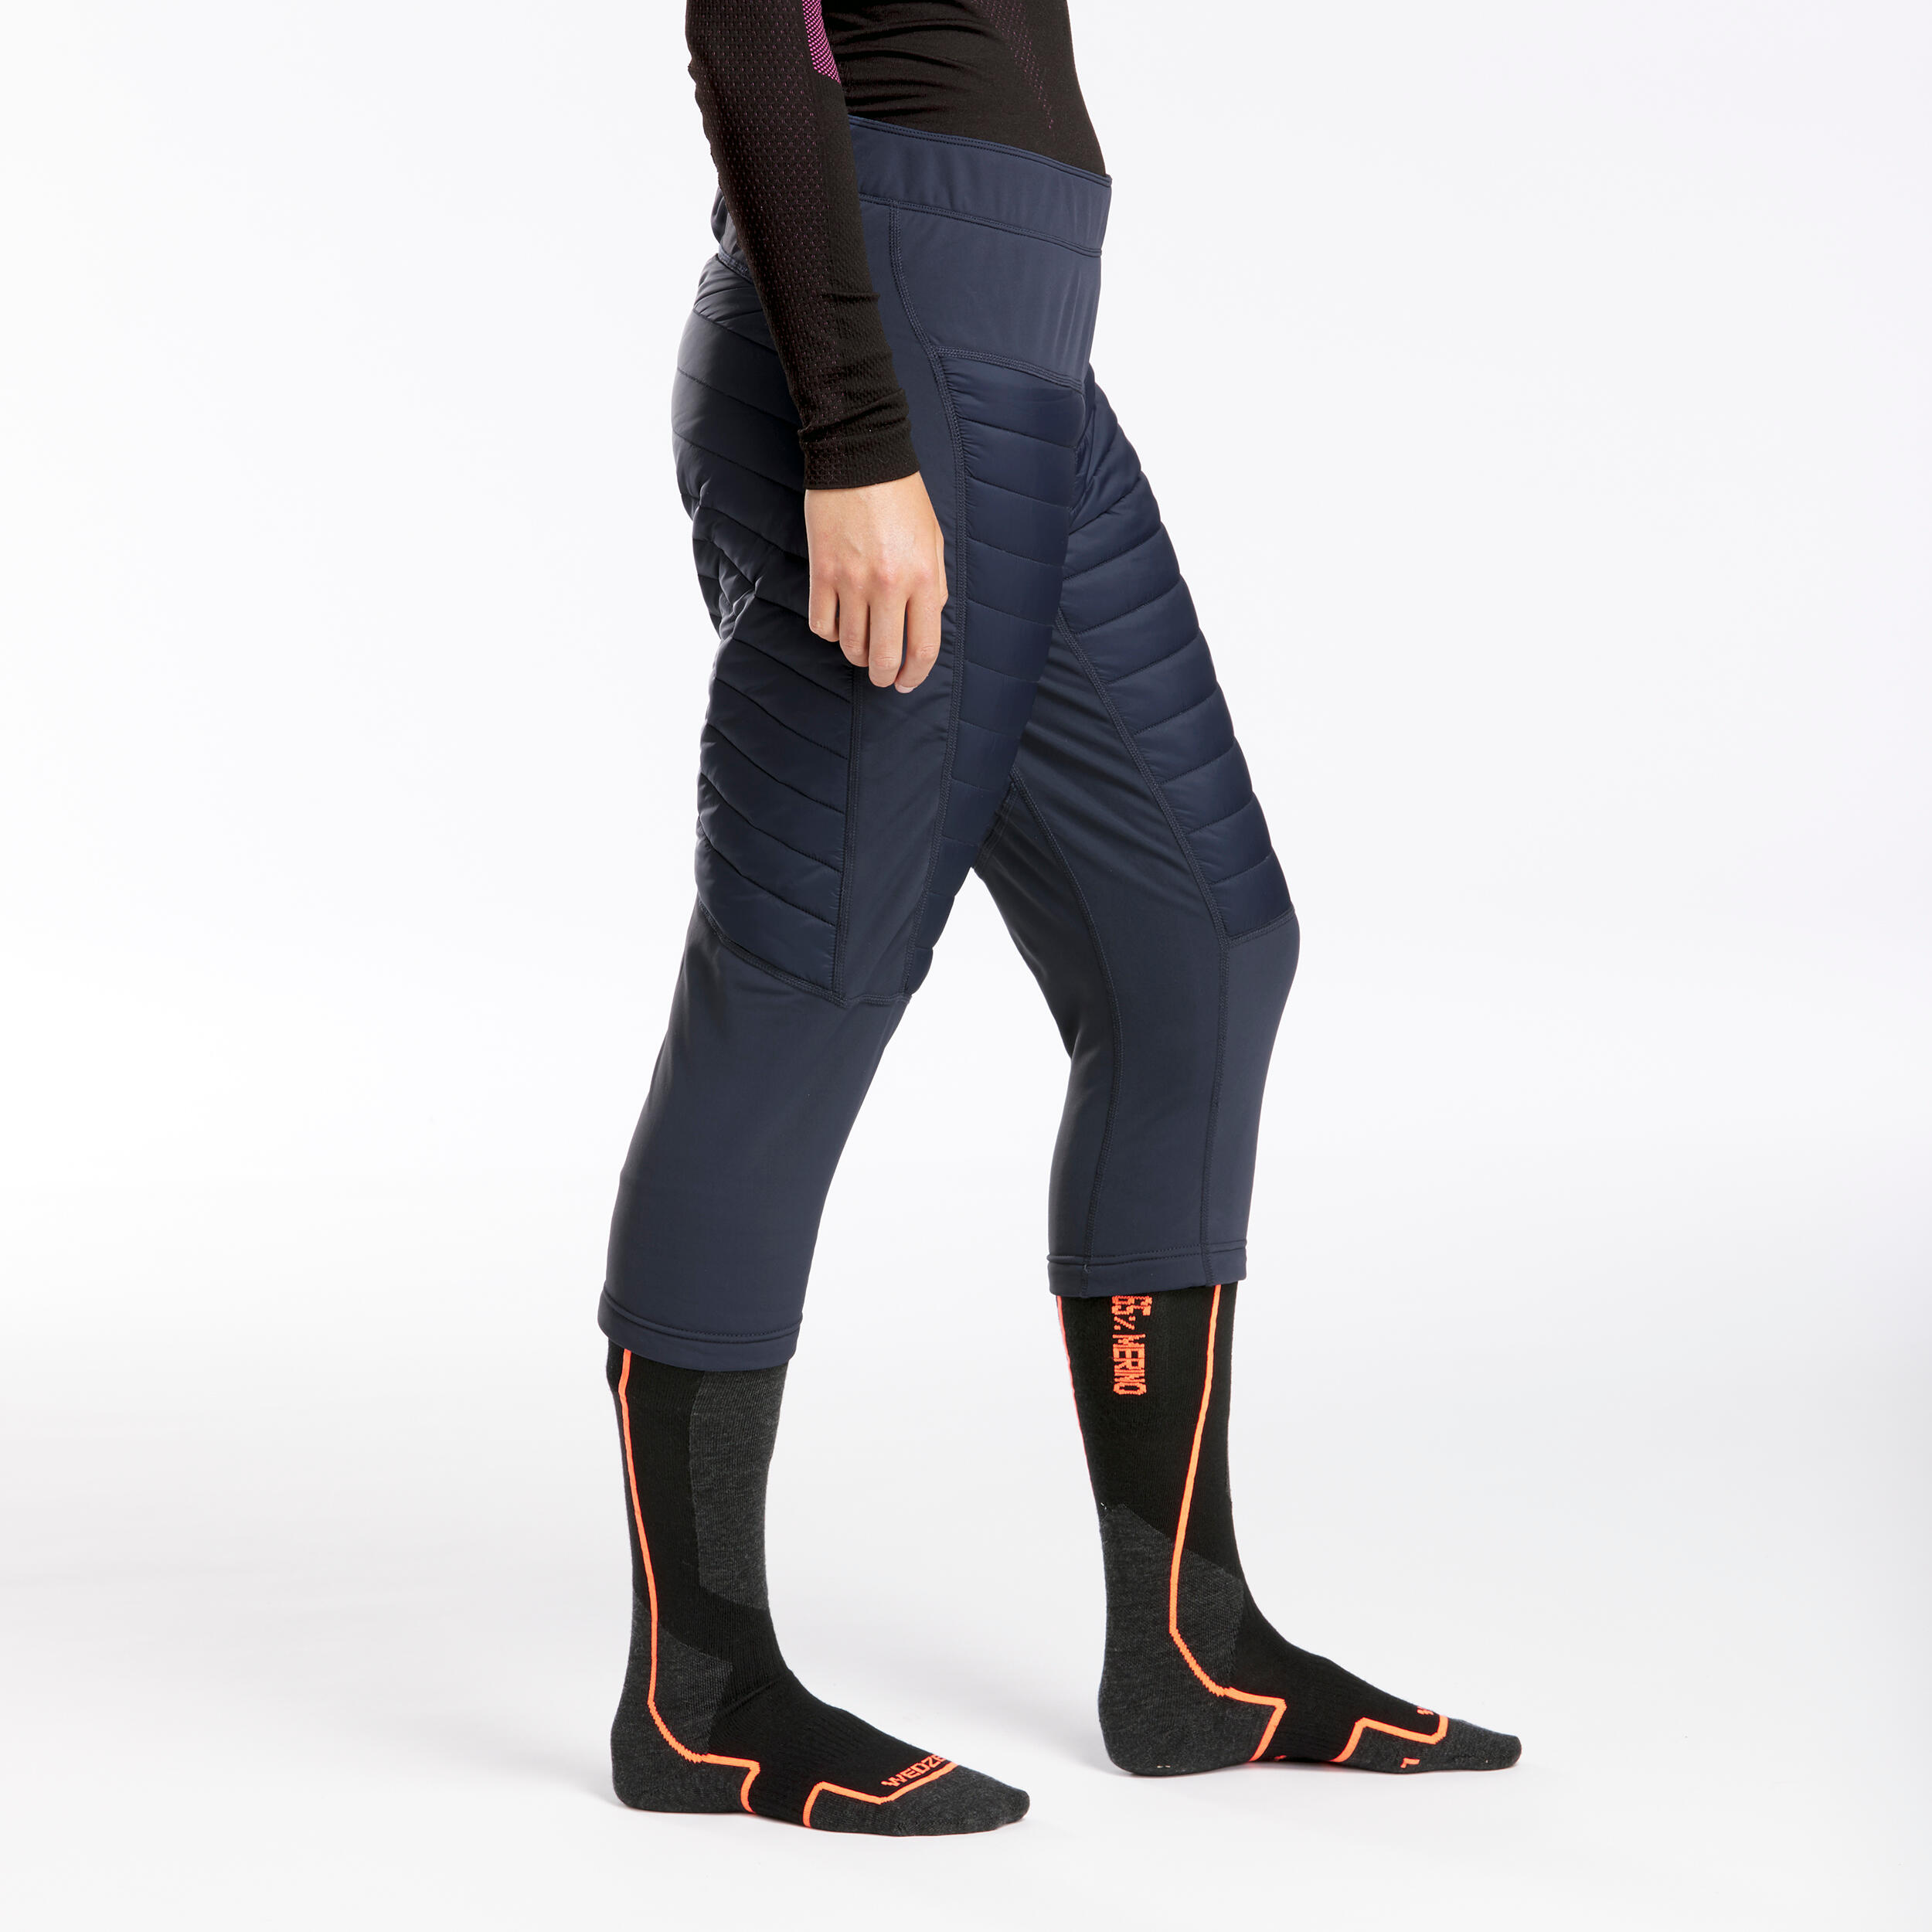 Women's Breathable Base Layer Pants - FR 900 Blue